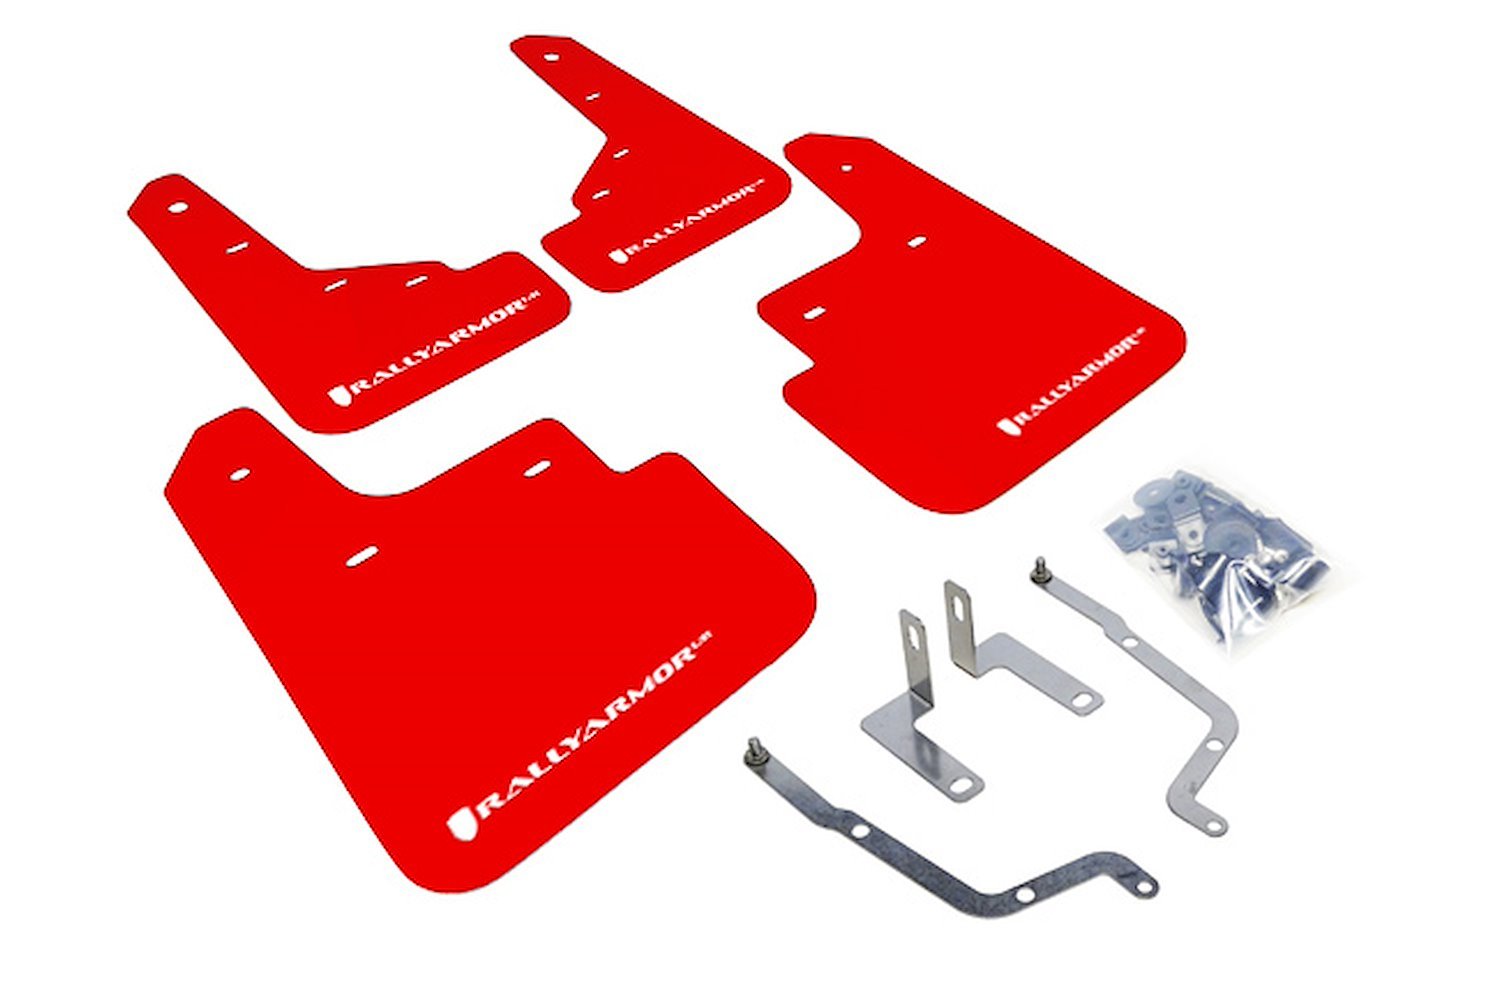 MF31URRDWH Mud Flap Kit for 2014-2018 Mazda 3 Grand Touring, Sport, SV, Touring - Red Mud Flap/White Logo